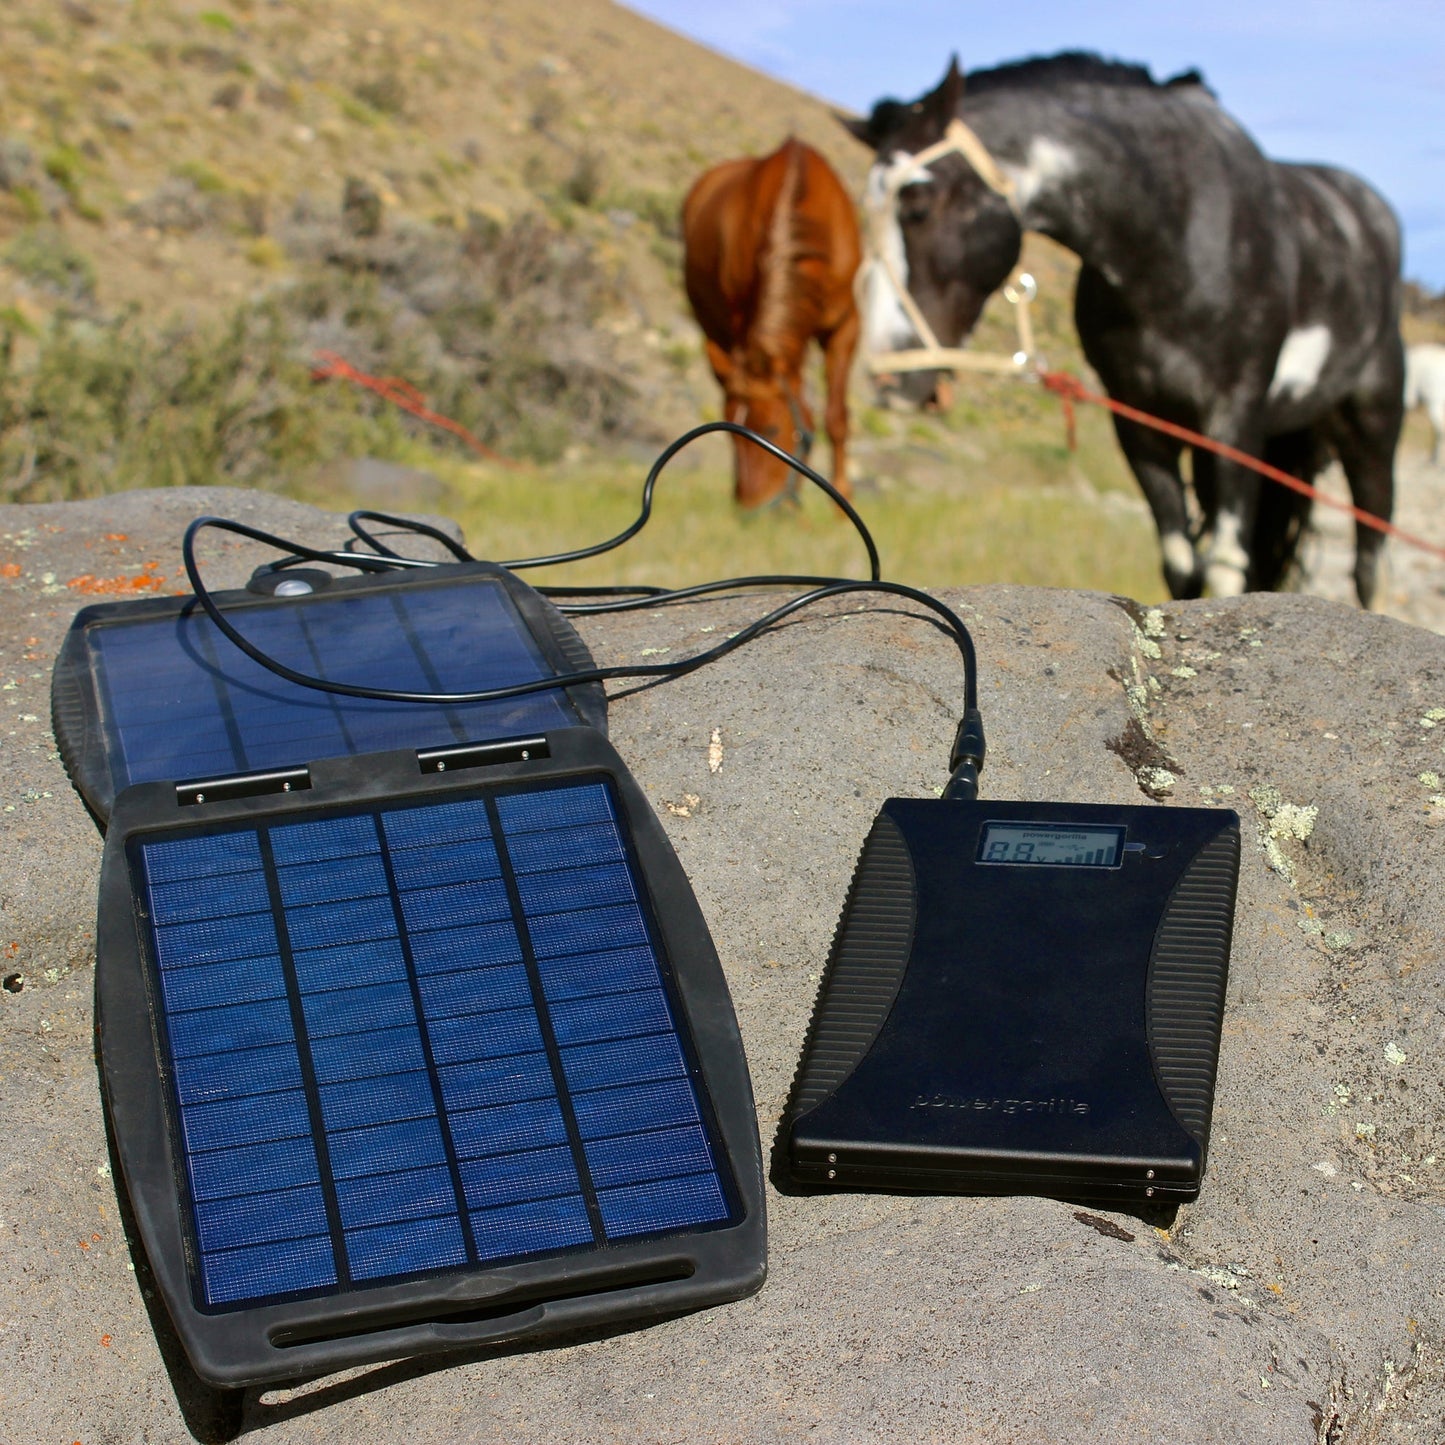 Powertraveller Solargorilla Portable Solar Panel